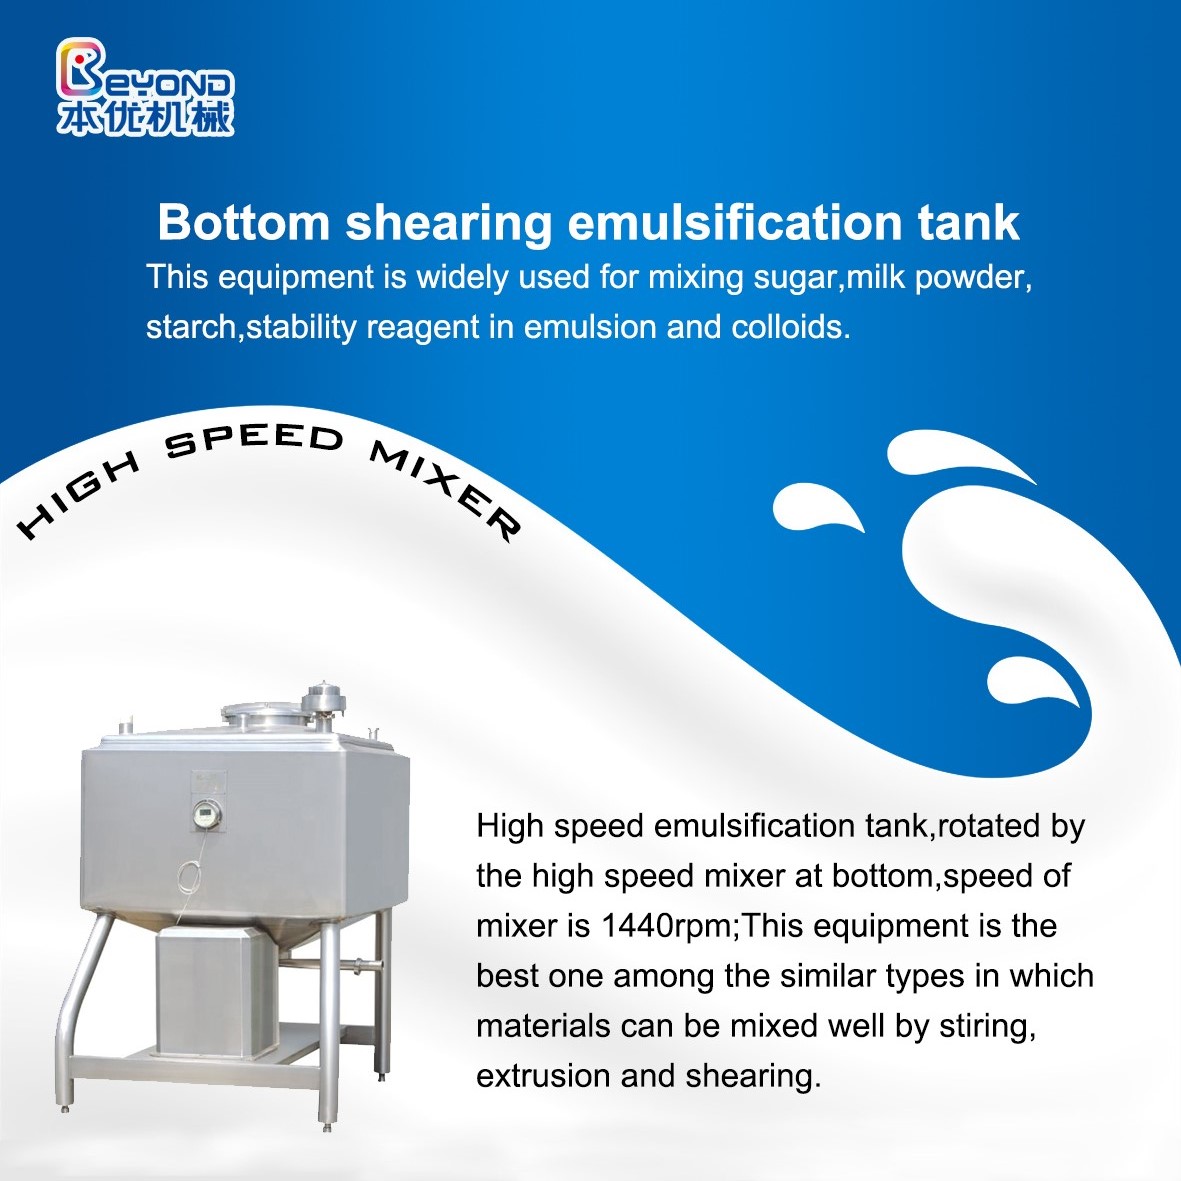 Bottom shearing emulsification tank